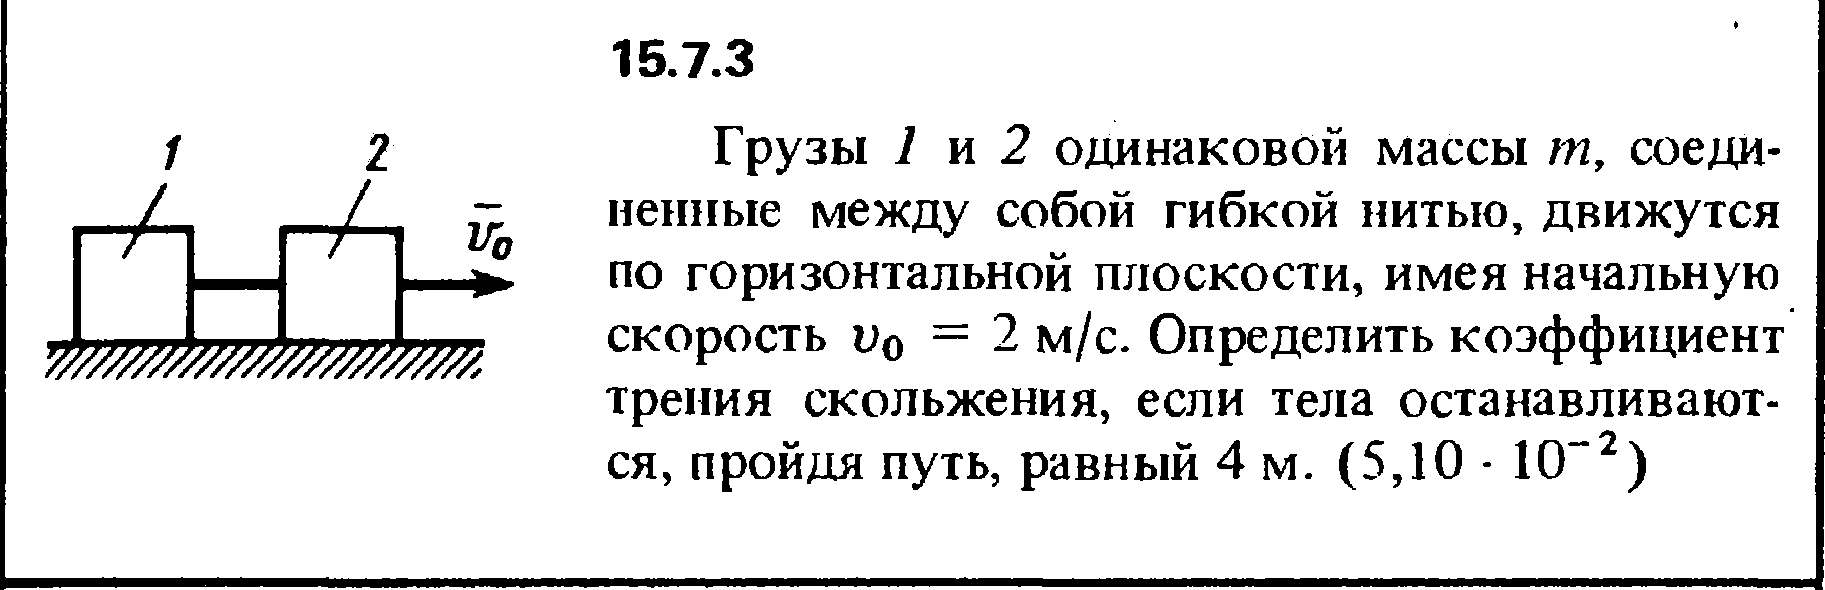 Решение задачи 15.7.3 из сборника Кепе О.Е. 1989 года